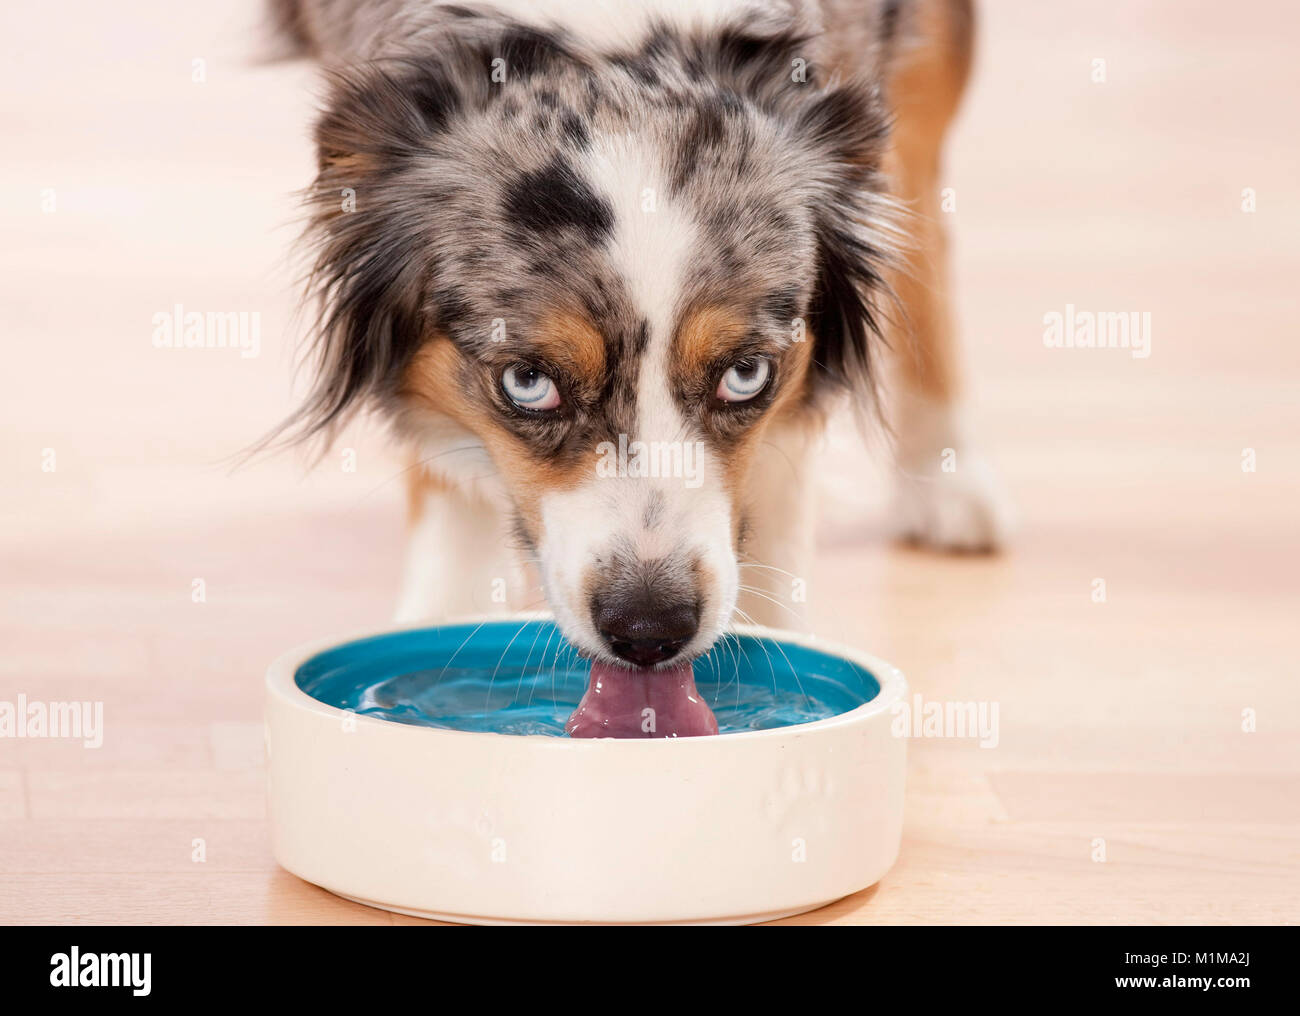 Australian Shepherd. Juvenile dog drinking from a water bowl. Germany Stock Photo